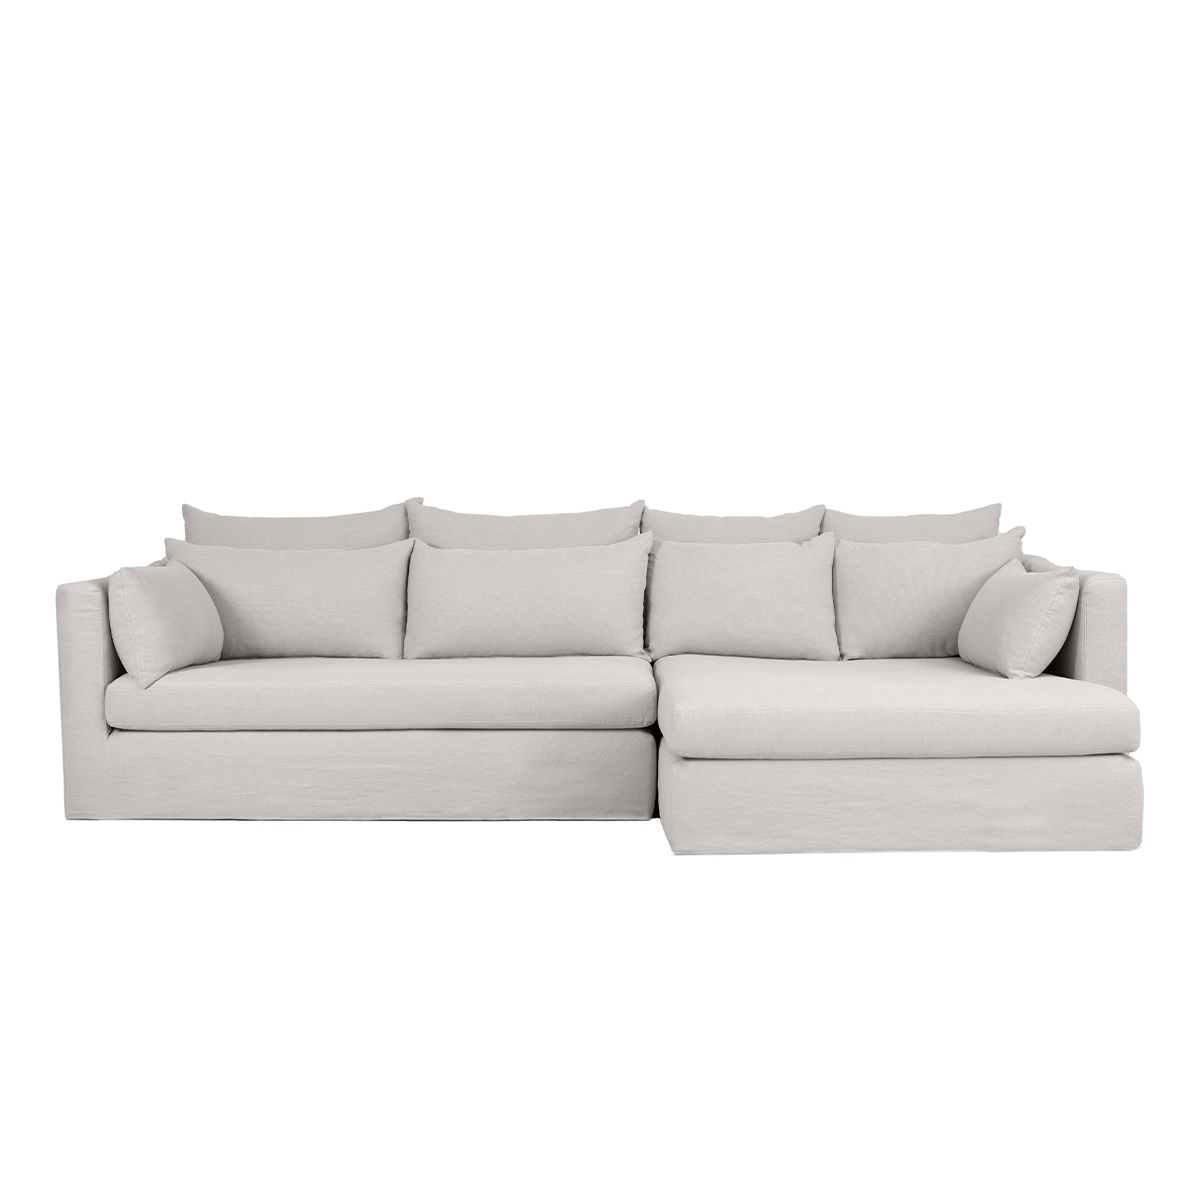 SuperBox corner sofa - Right angle, L335 x P180 x H85 cm - Linen - image 1